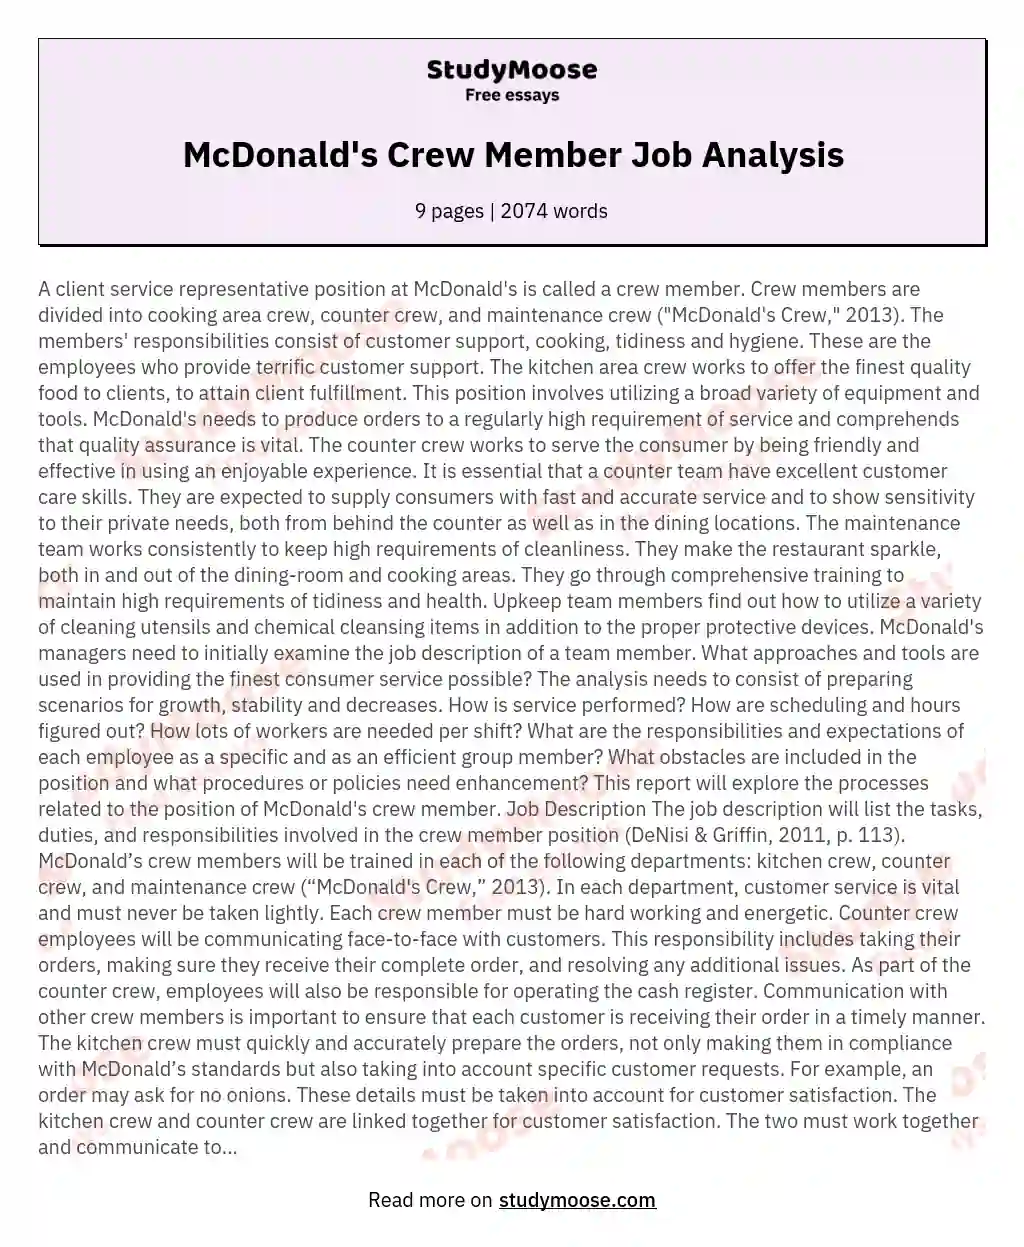 McDonald's Crew Member Job Analysis essay